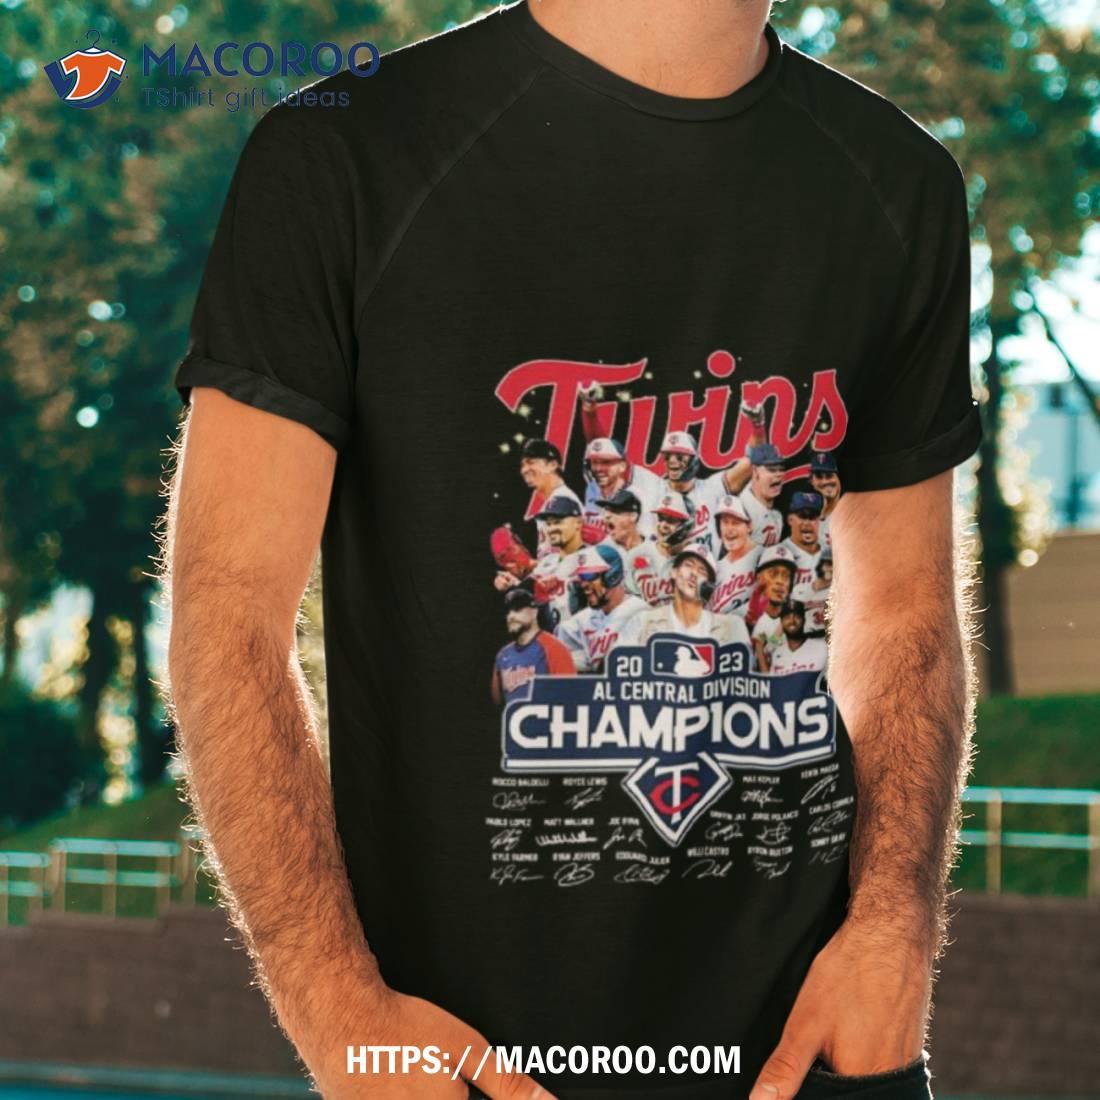 World Series Champions 2019 Washington Nationals T Shirts, Hoodies,  Sweatshirts & Merch